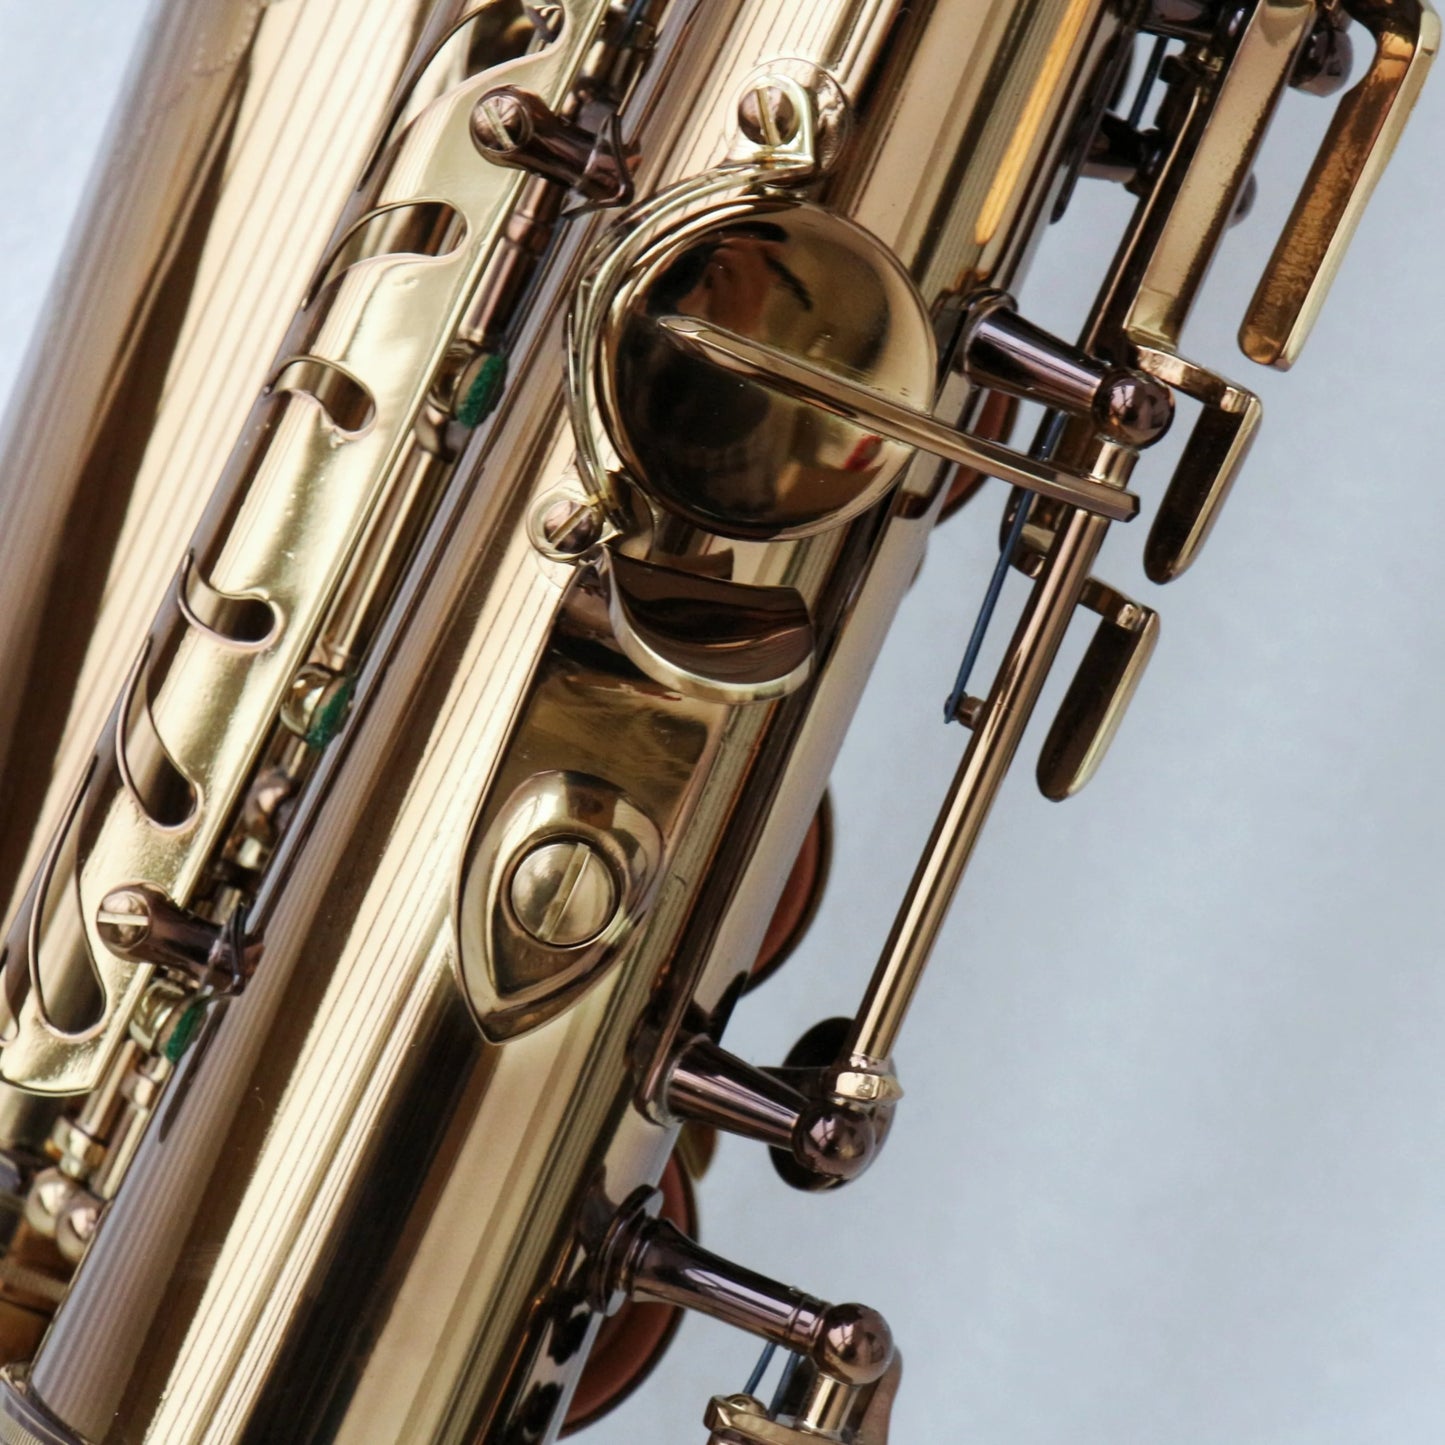 Wholesale professional saxophone alto Brass body Coffee Gold Plated alto saxophone